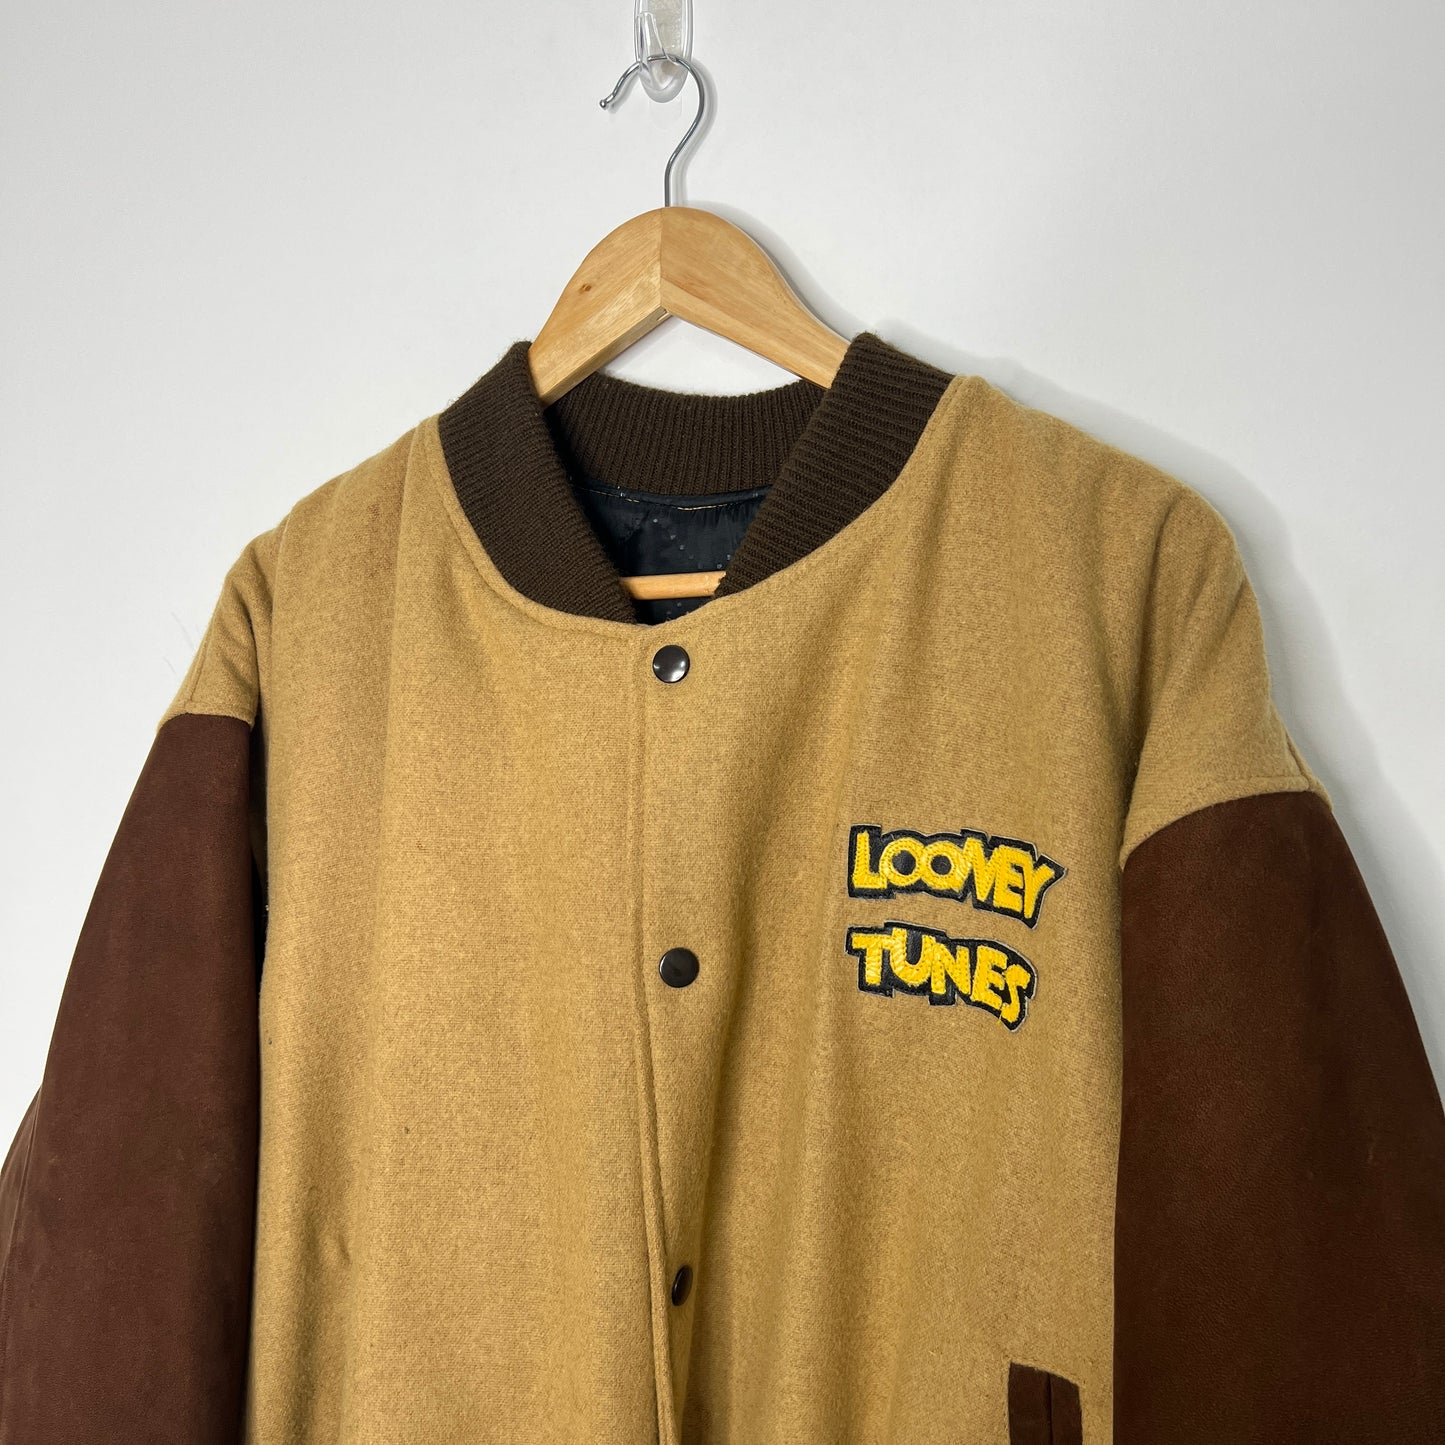 Vintage Looney Tunes Jacket